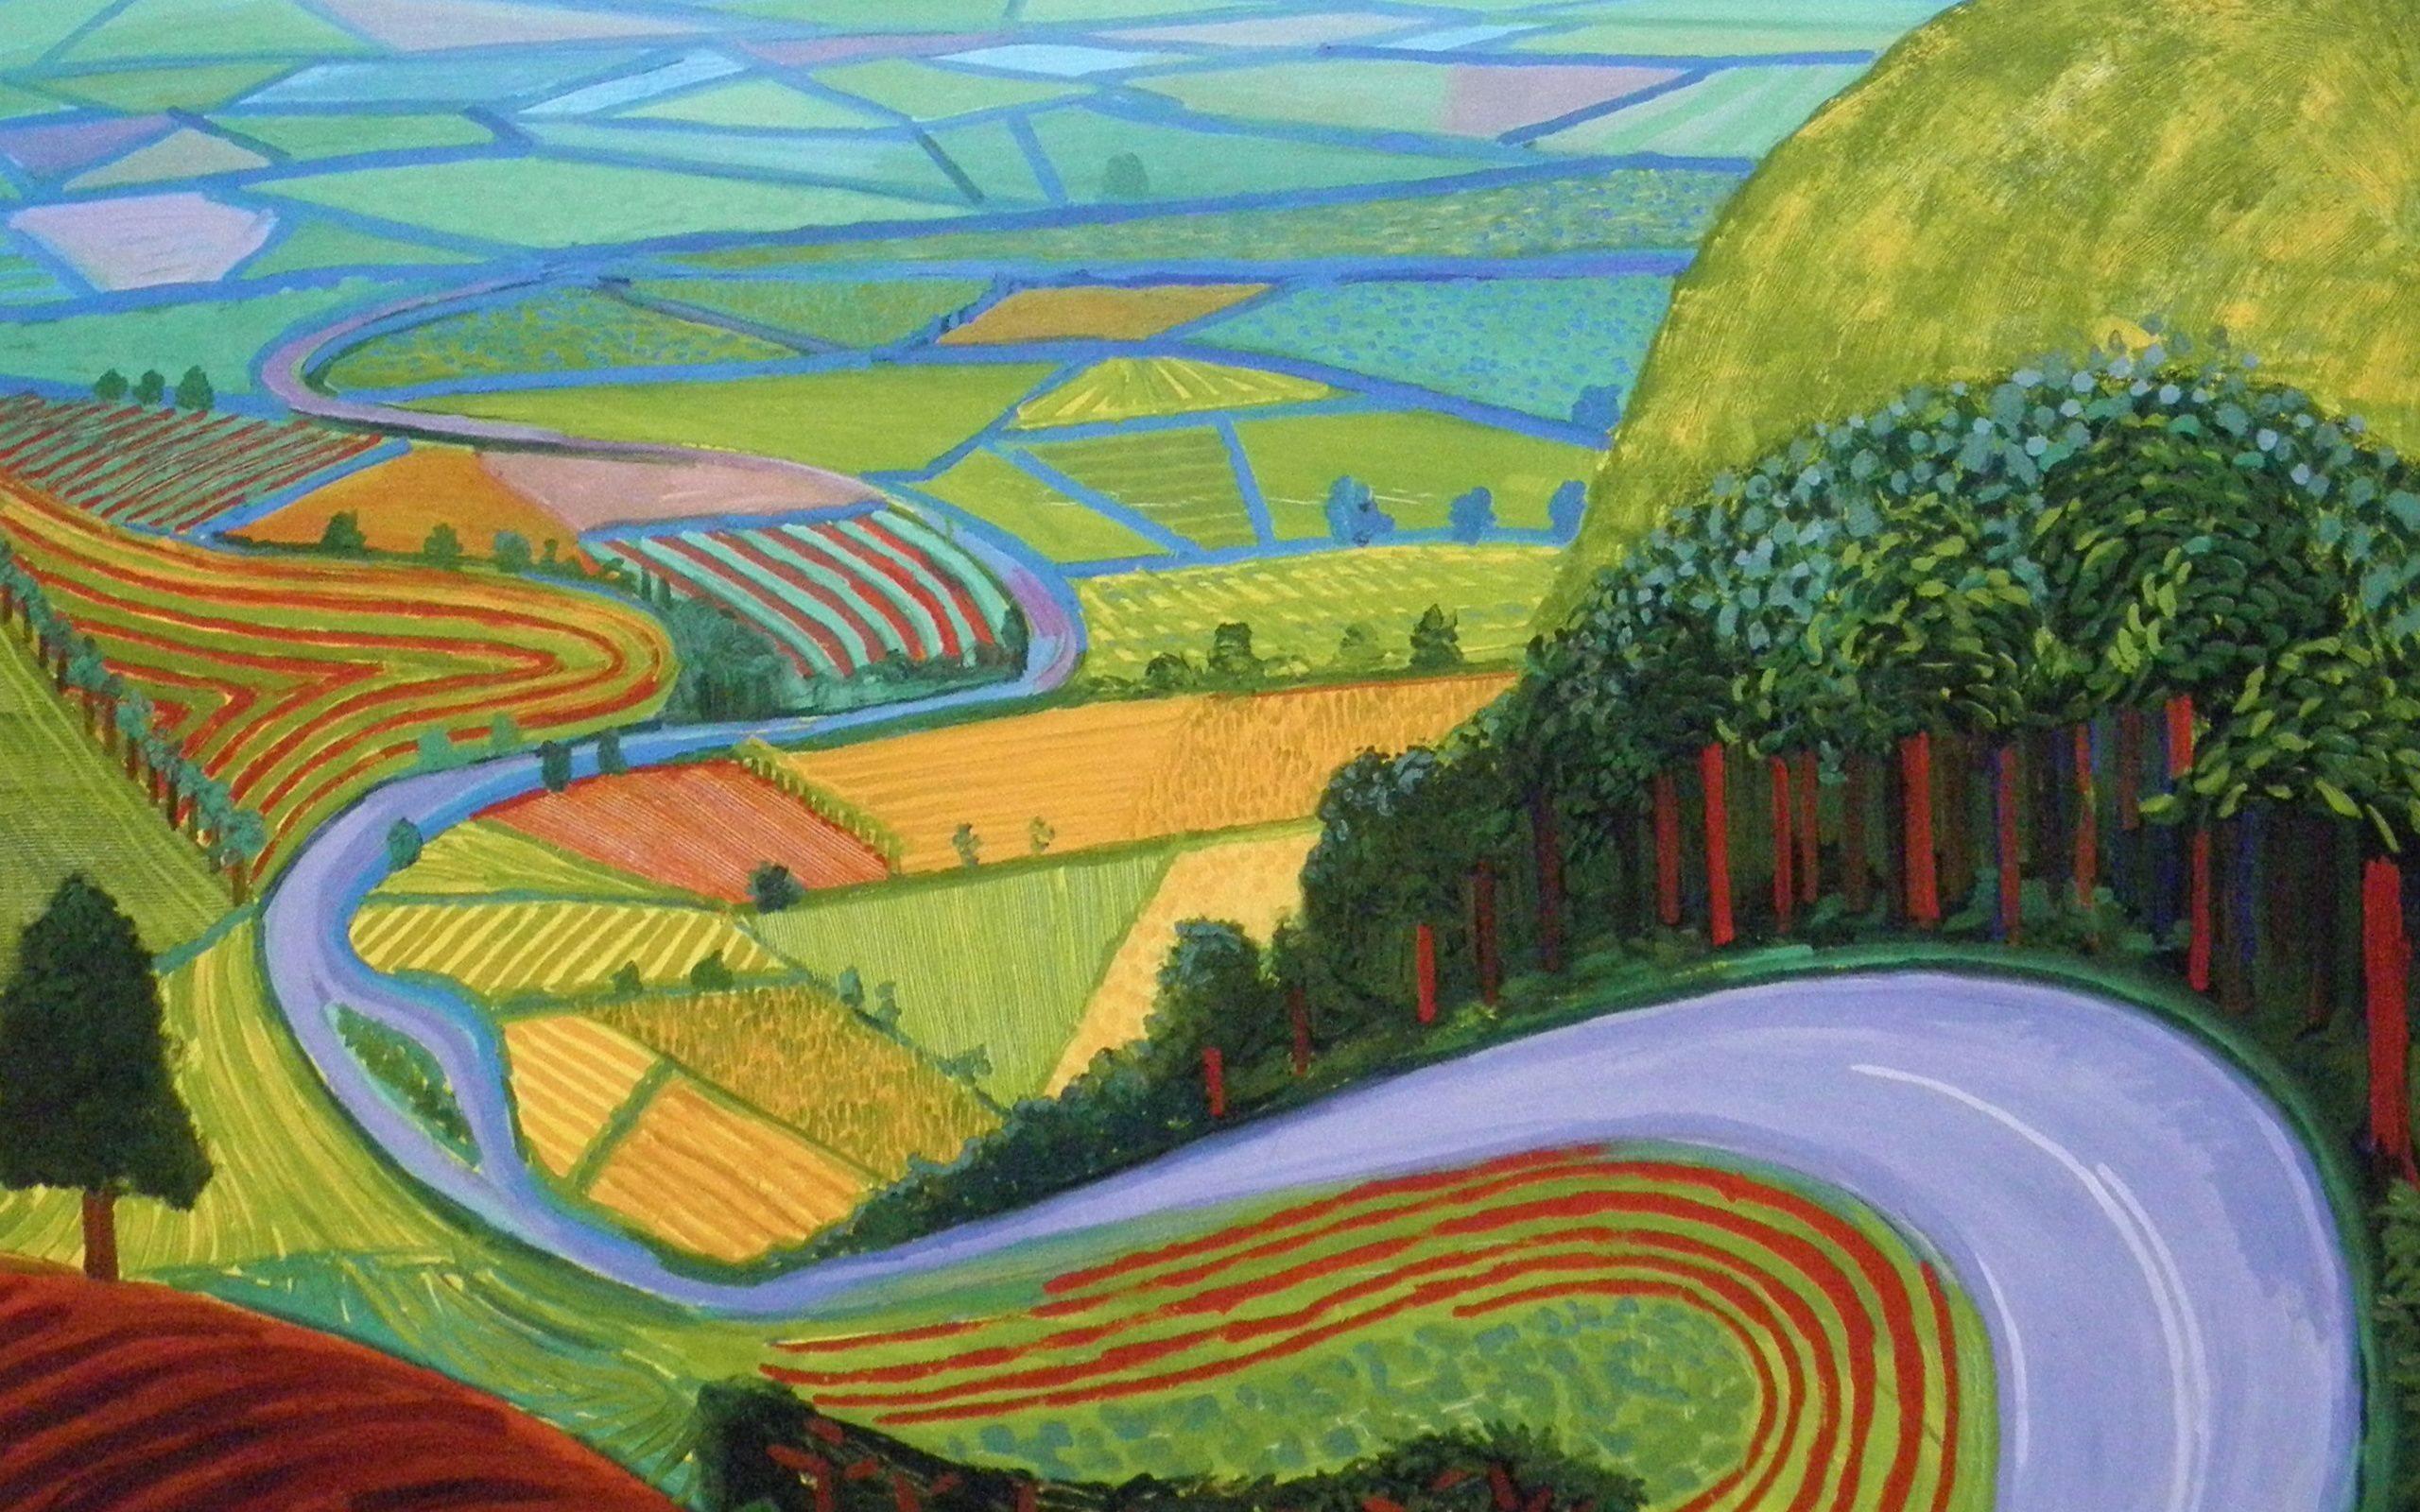 Download wallpaper blu road, david hockney, british artist